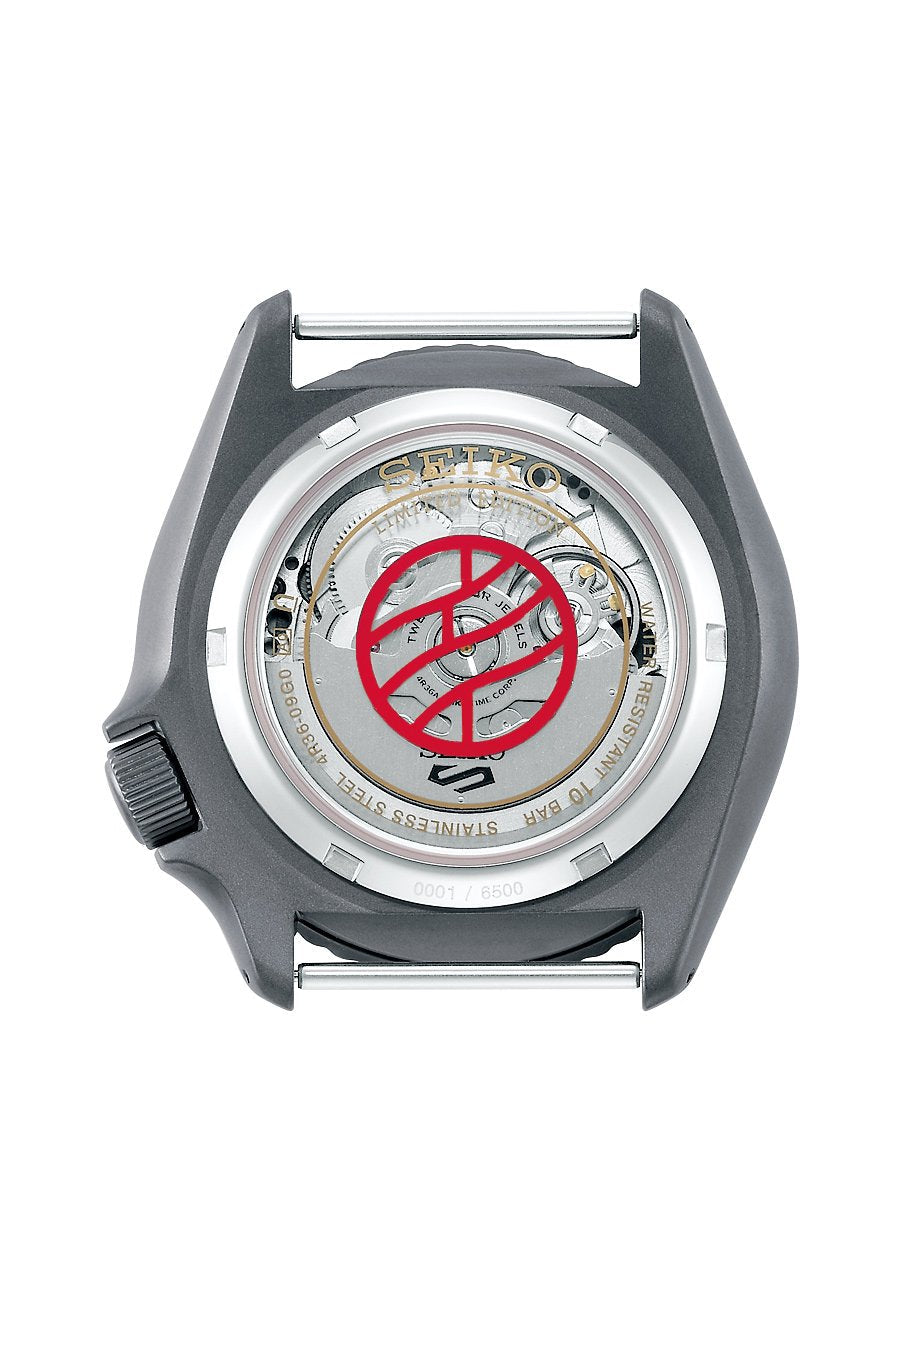 Seiko 5 SRPF75K1 Naruto Series Shikamaru Nara Limited Edition Automatic Watch for Men's-Watch Portal Philippines